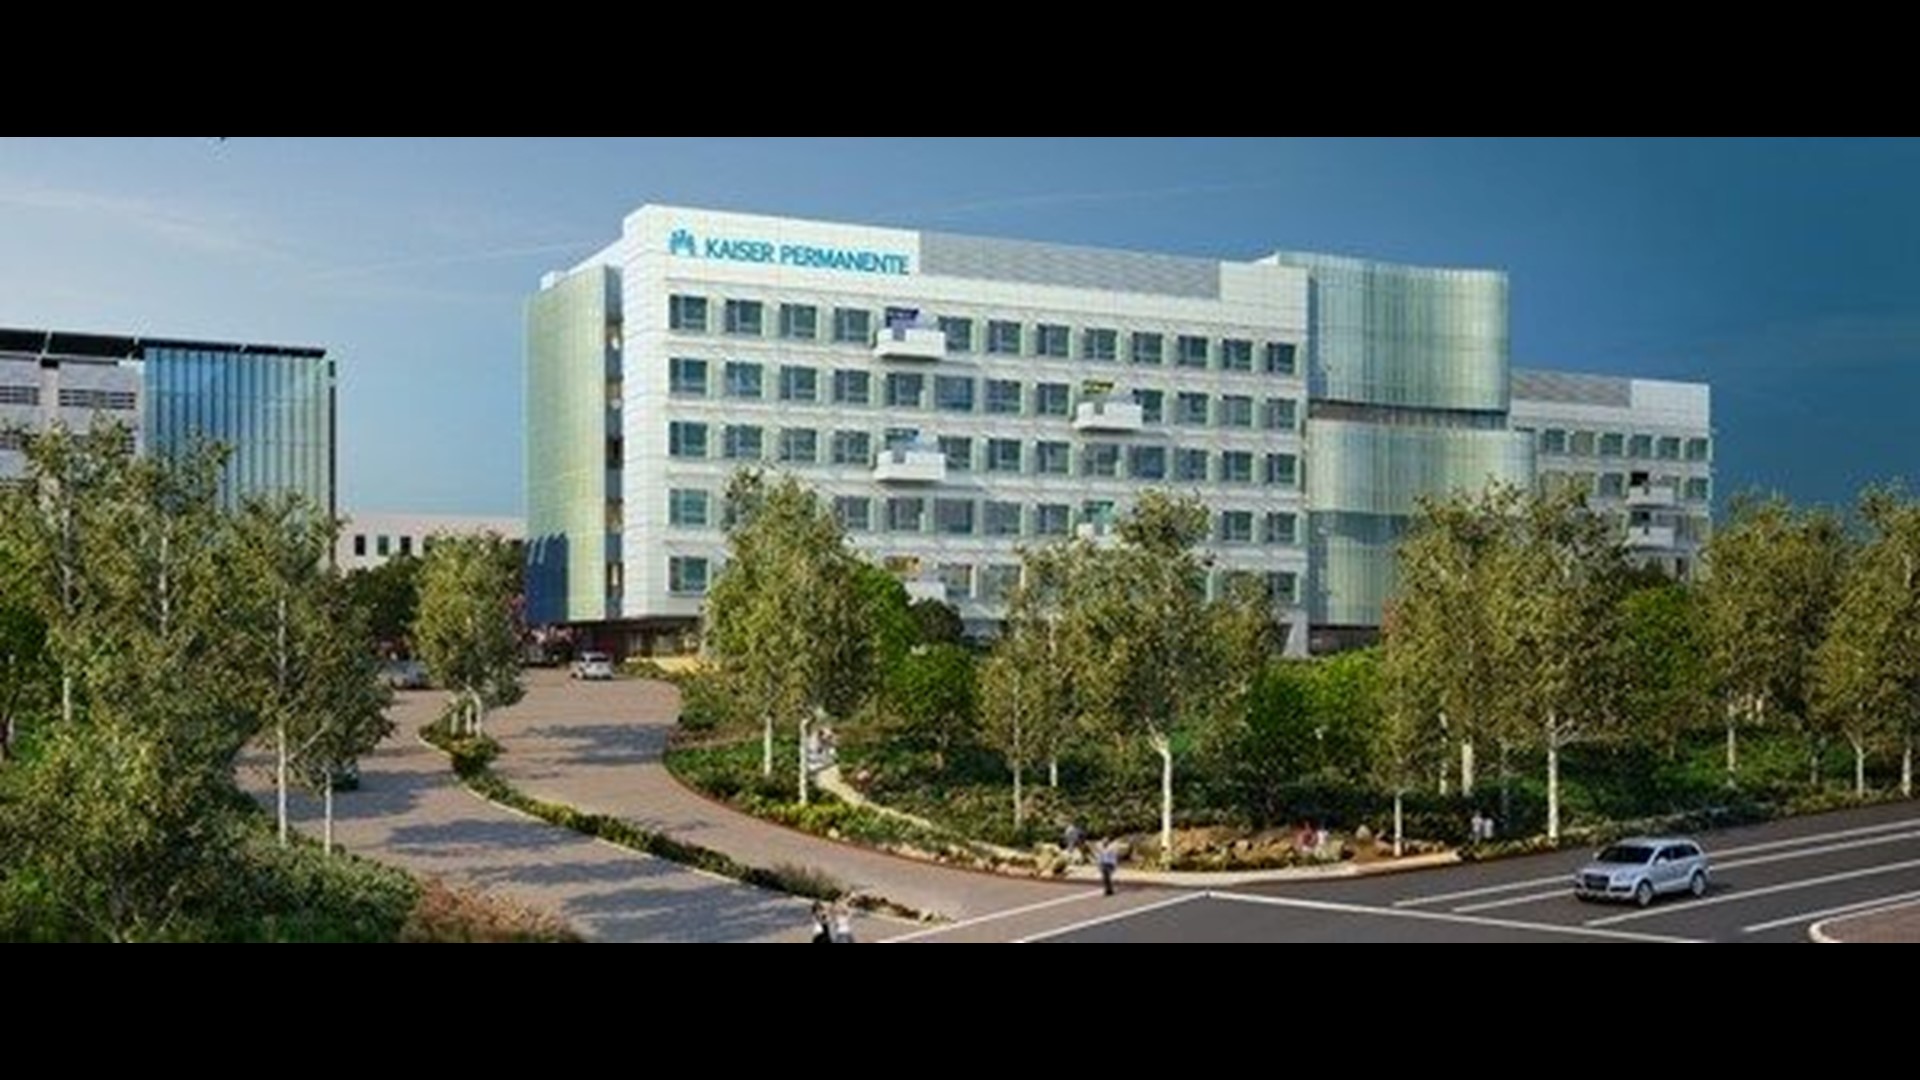 New Kaiser Permanente San Diego Medical Center to Provide CuttingEdge